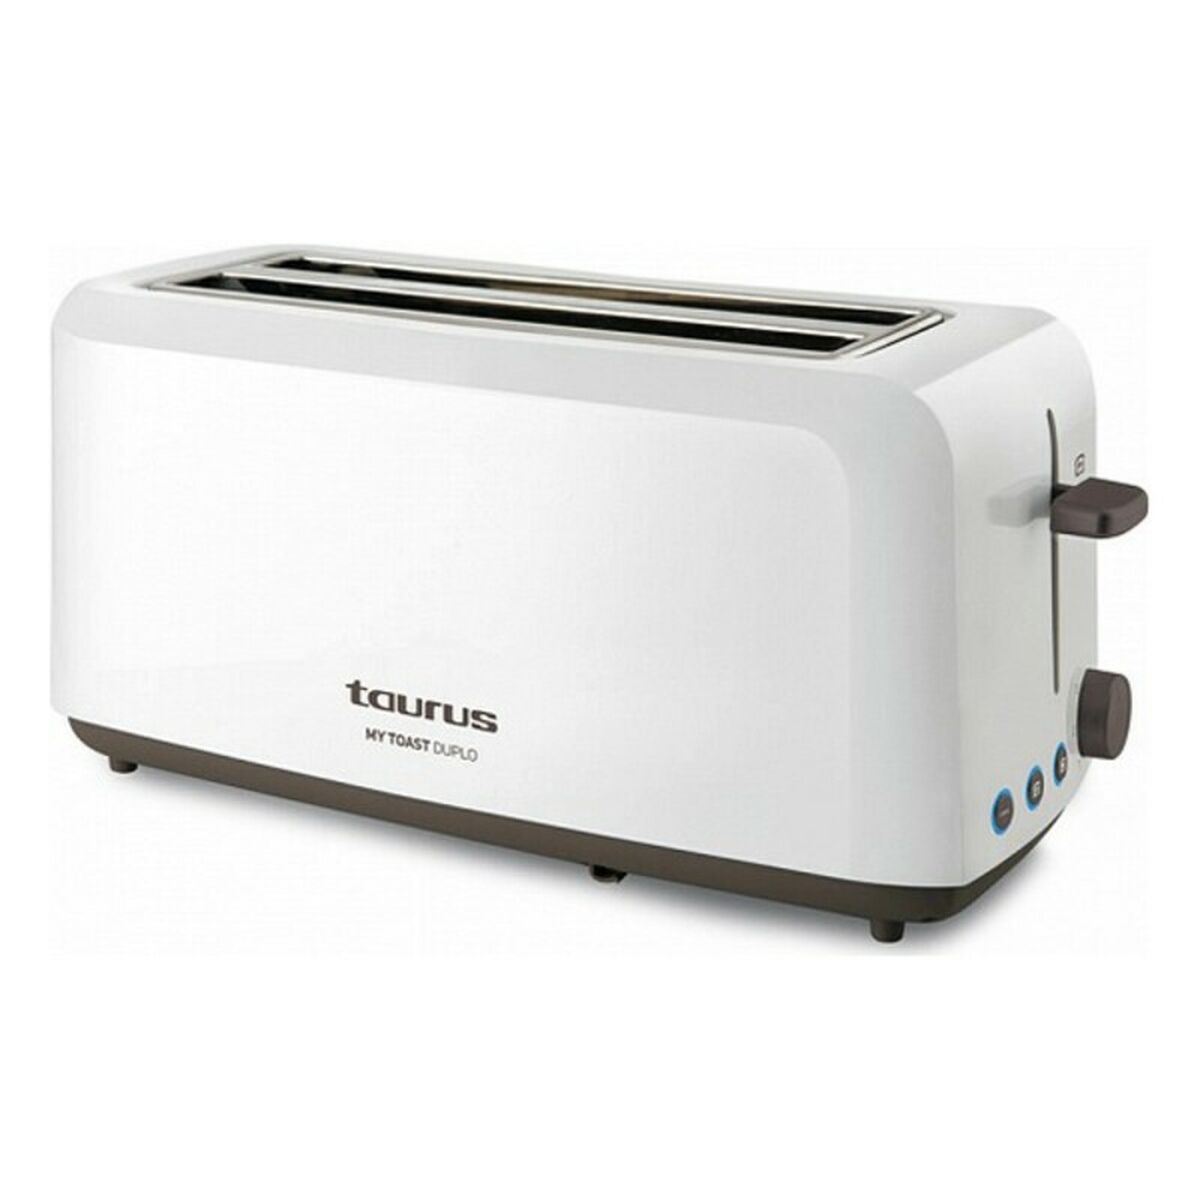 Toaster Taurus MY TOAST DUPLO 1450W Weiß 1450 W - CA International 